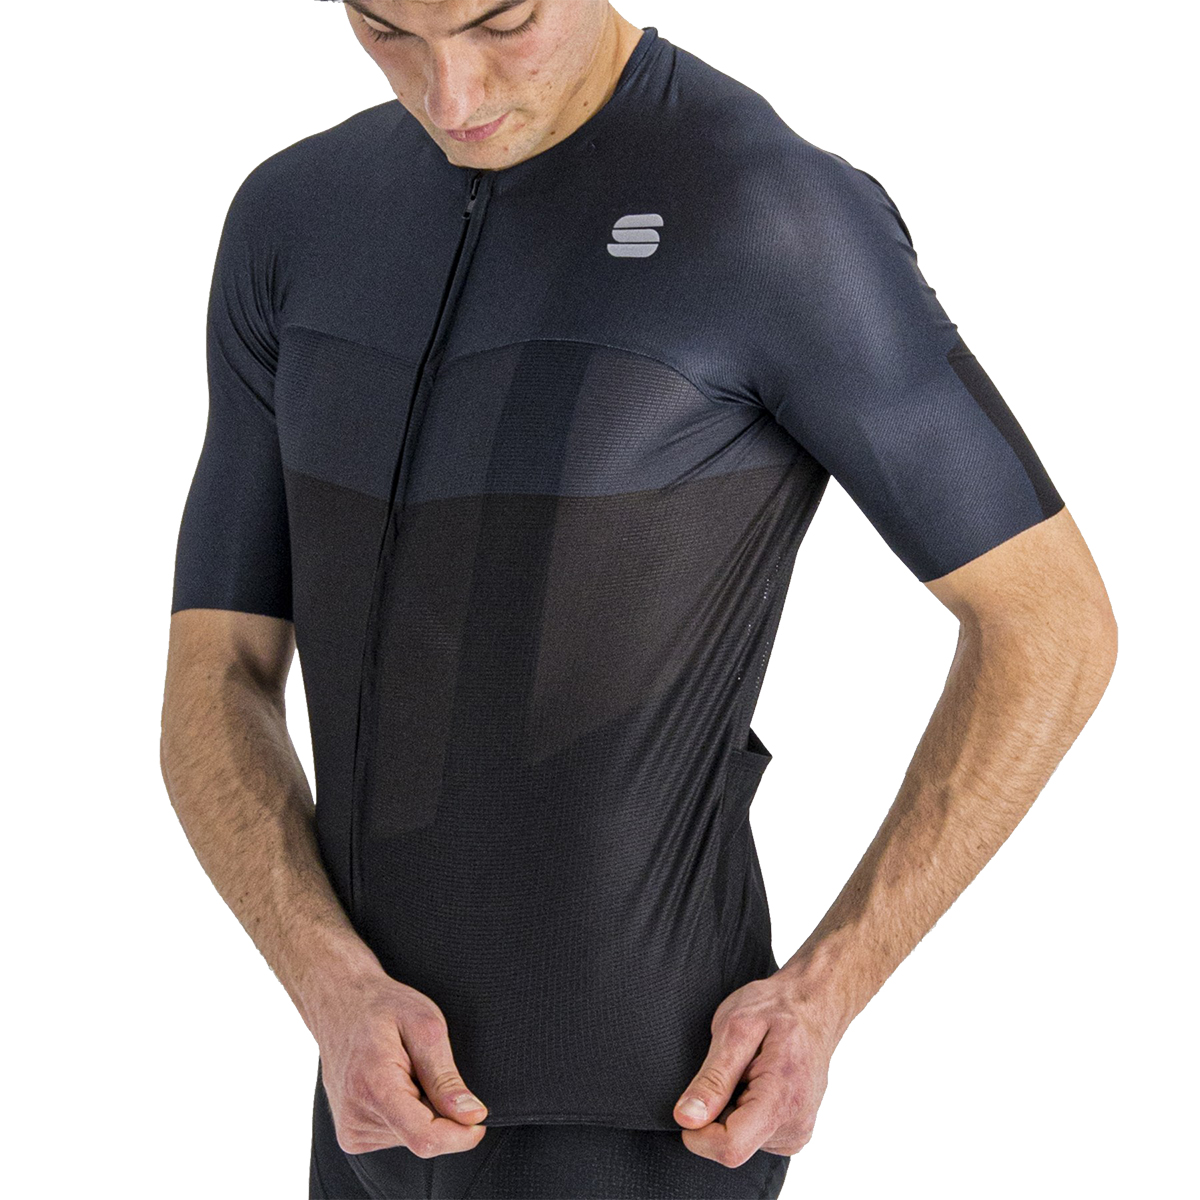 Sportful Pro Light Short Sleeve Cycling Jersey | Merlin Cycles